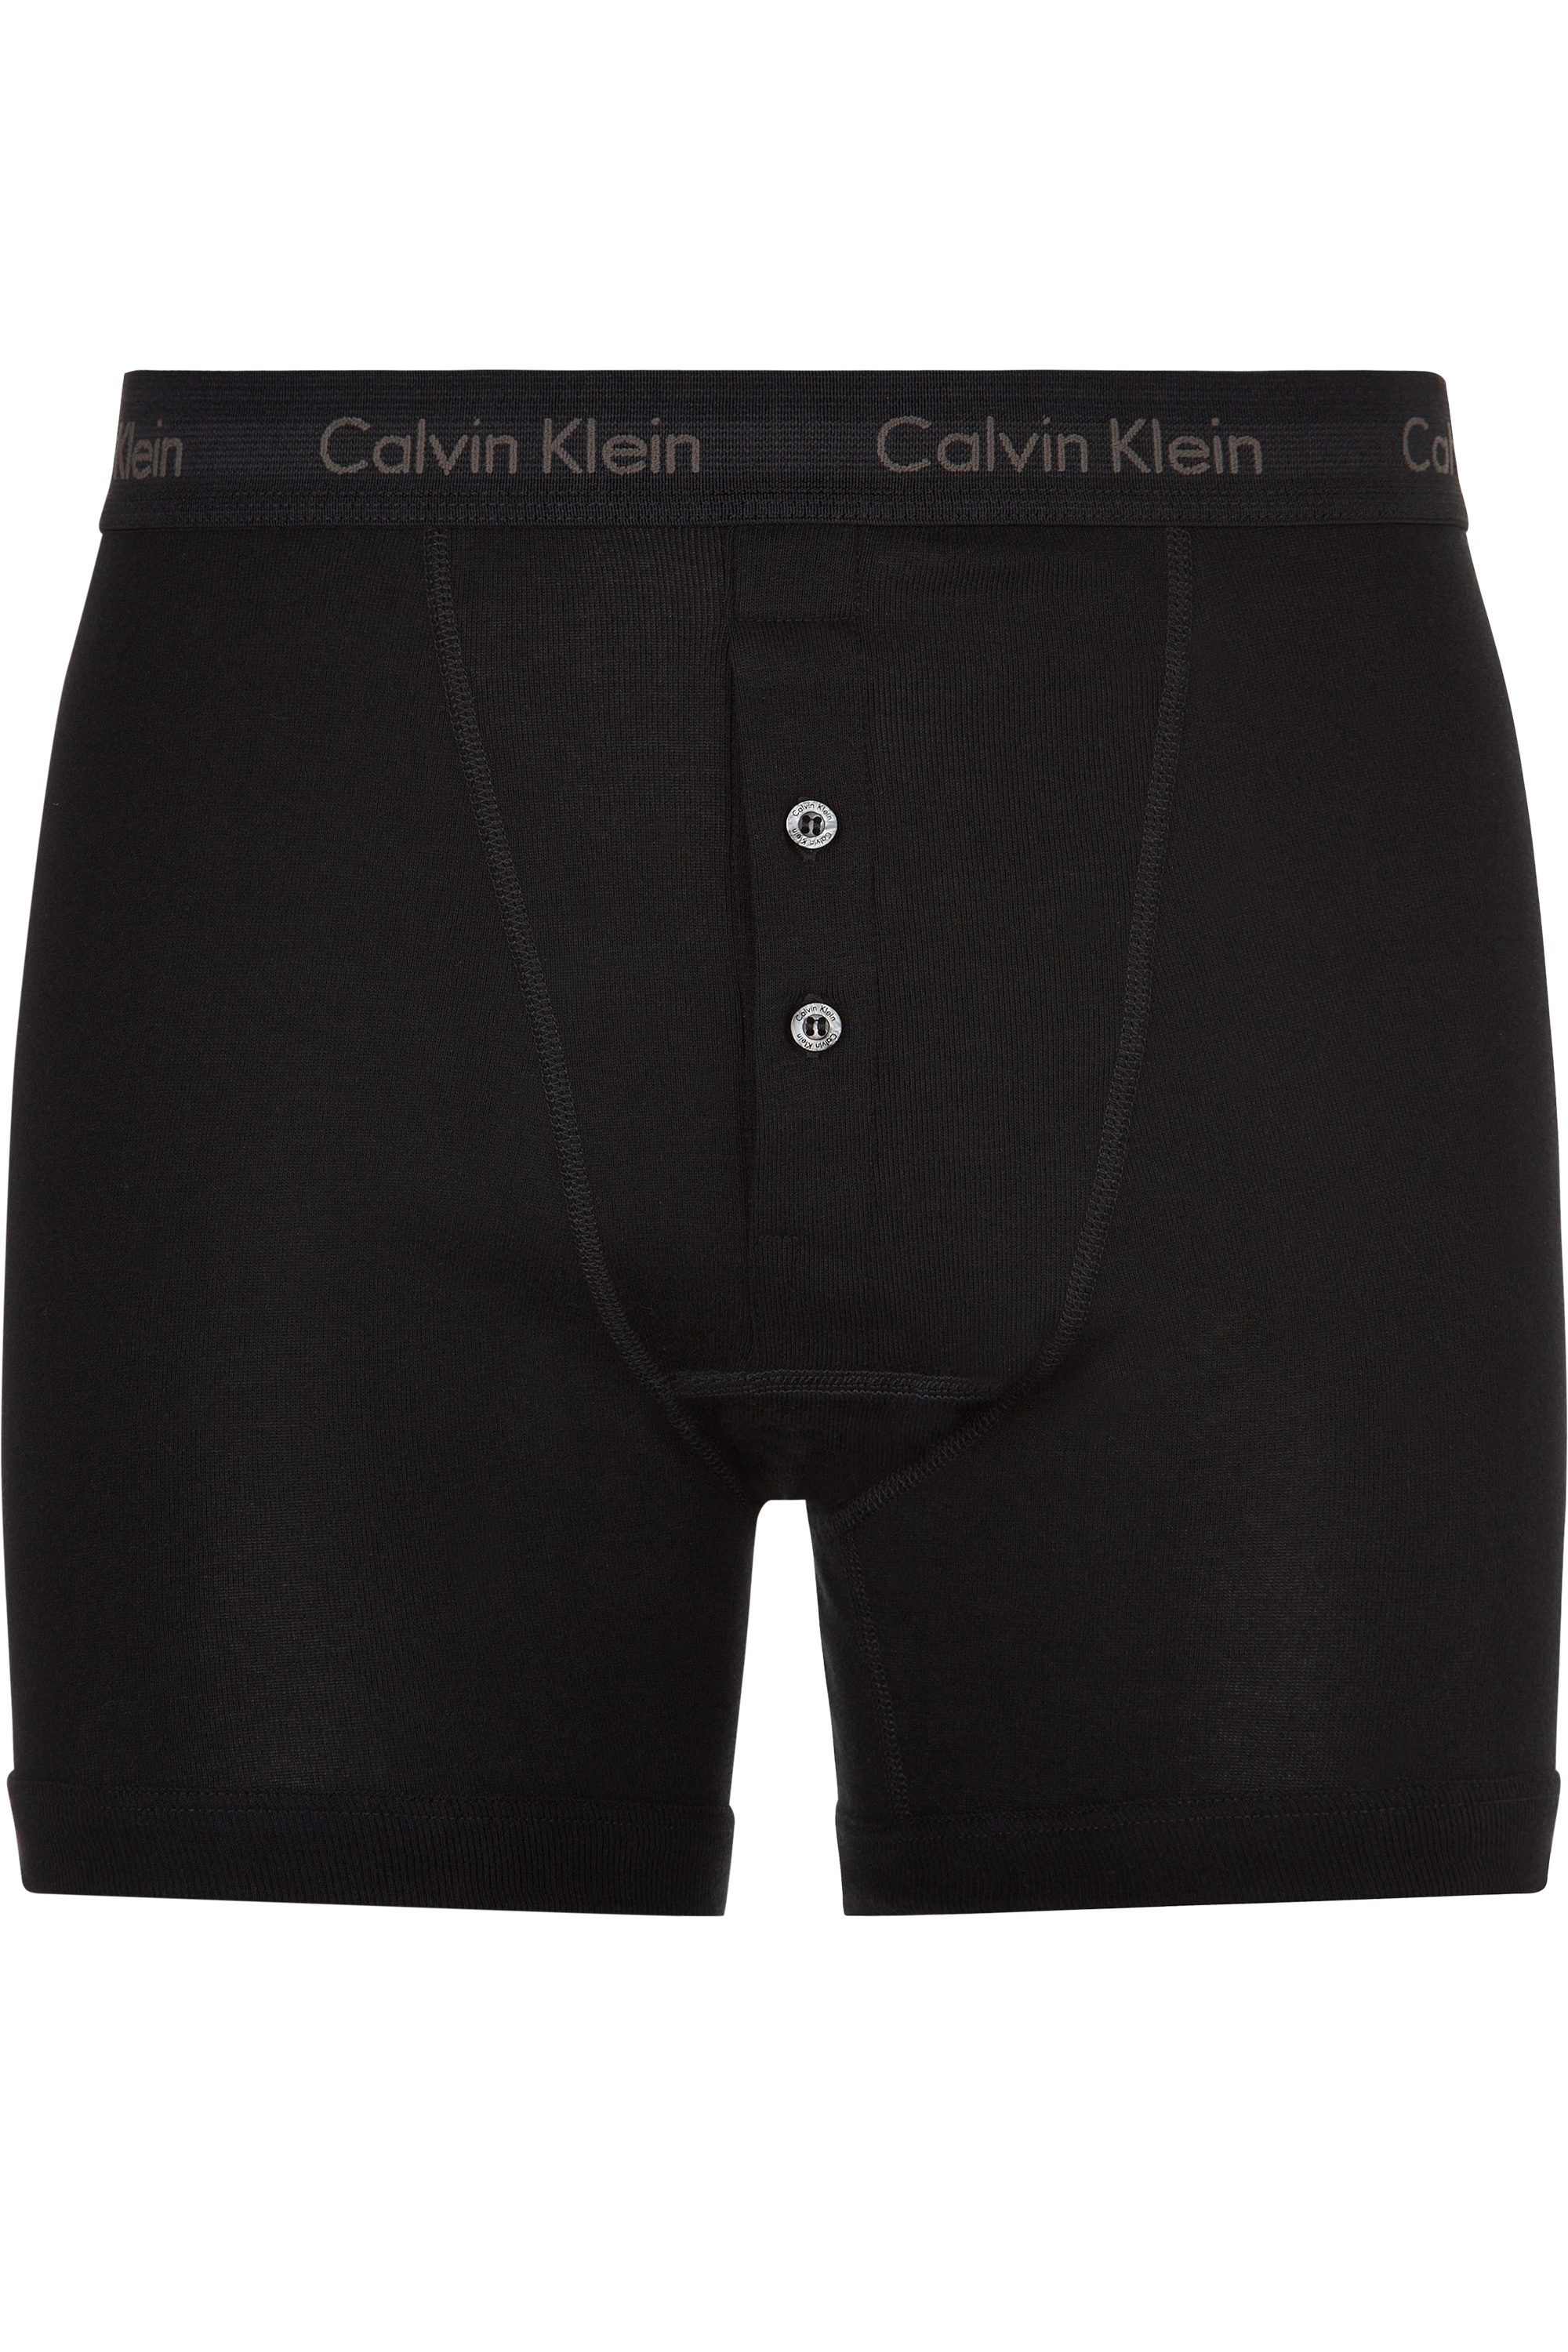 Calvin klein Black & White Button Fly Boxer Pack in Black for Men | Lyst